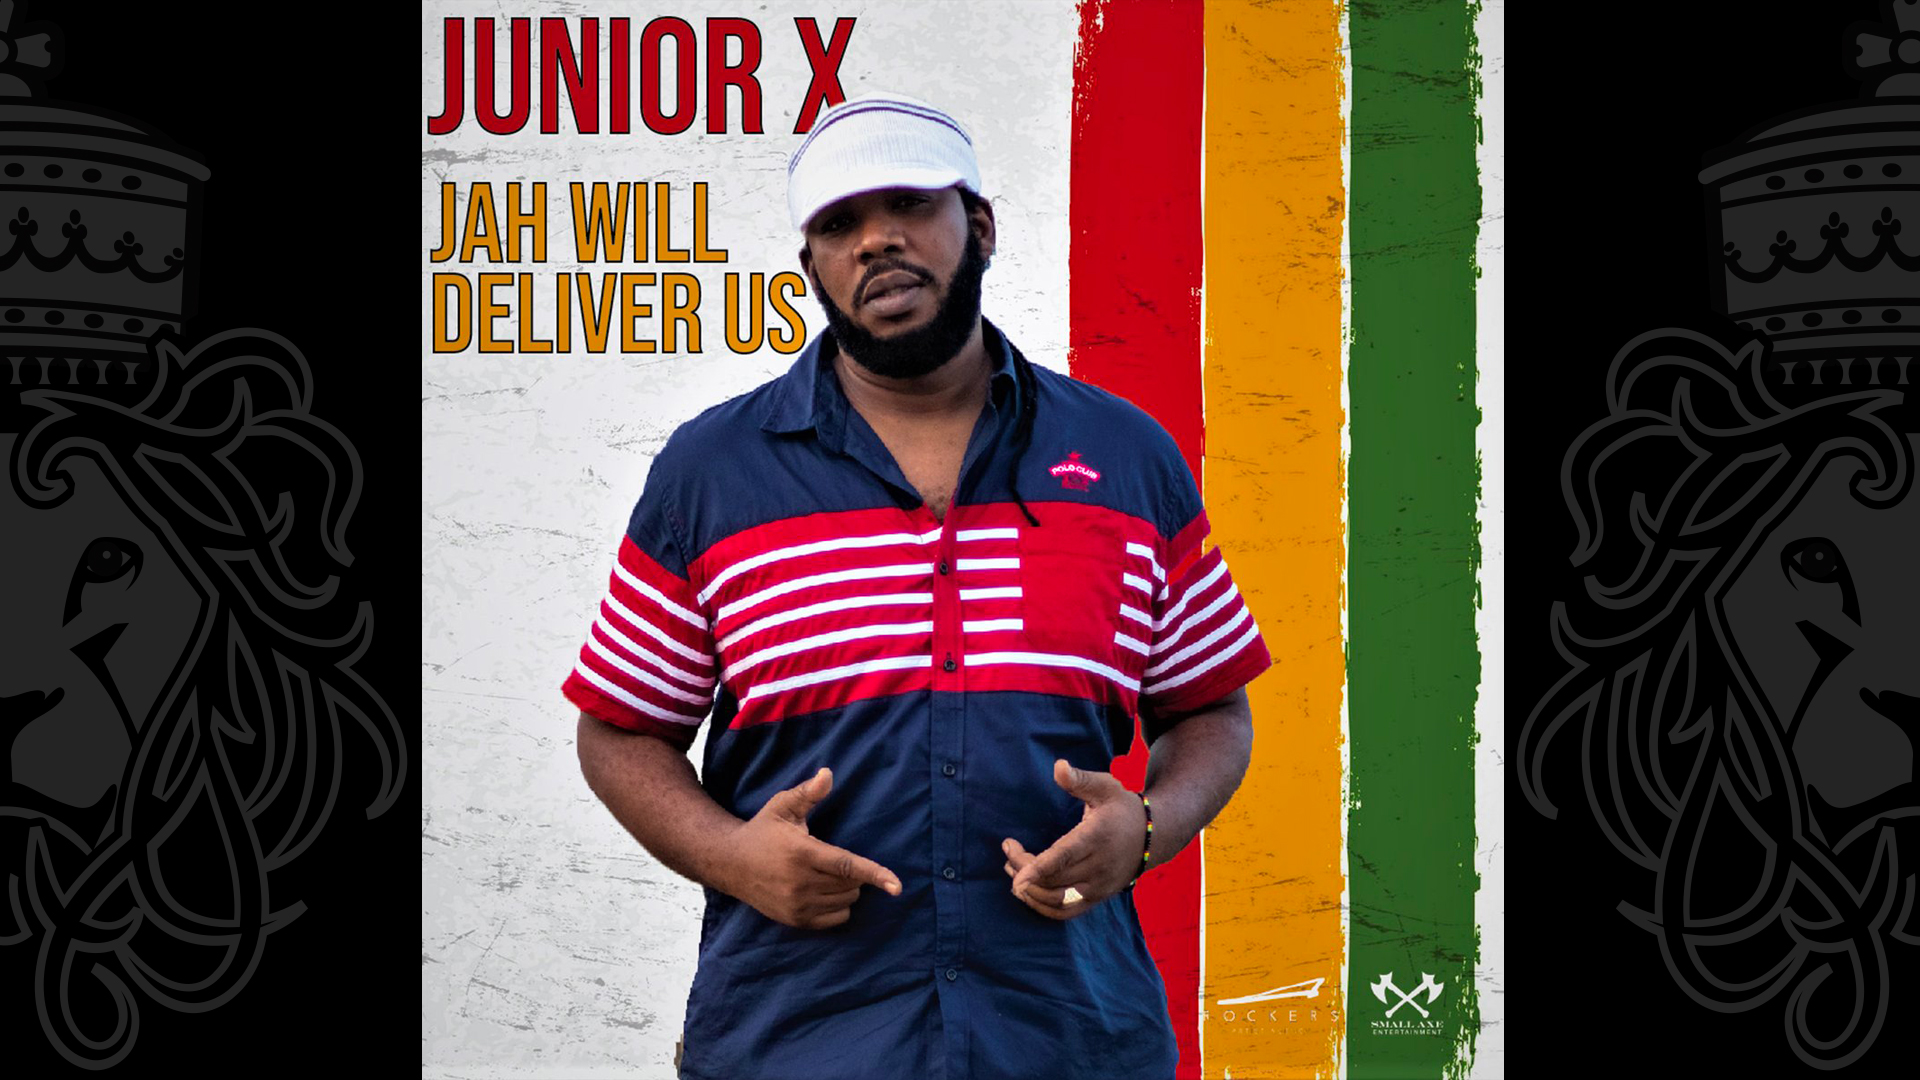 Jah Wil deliver us